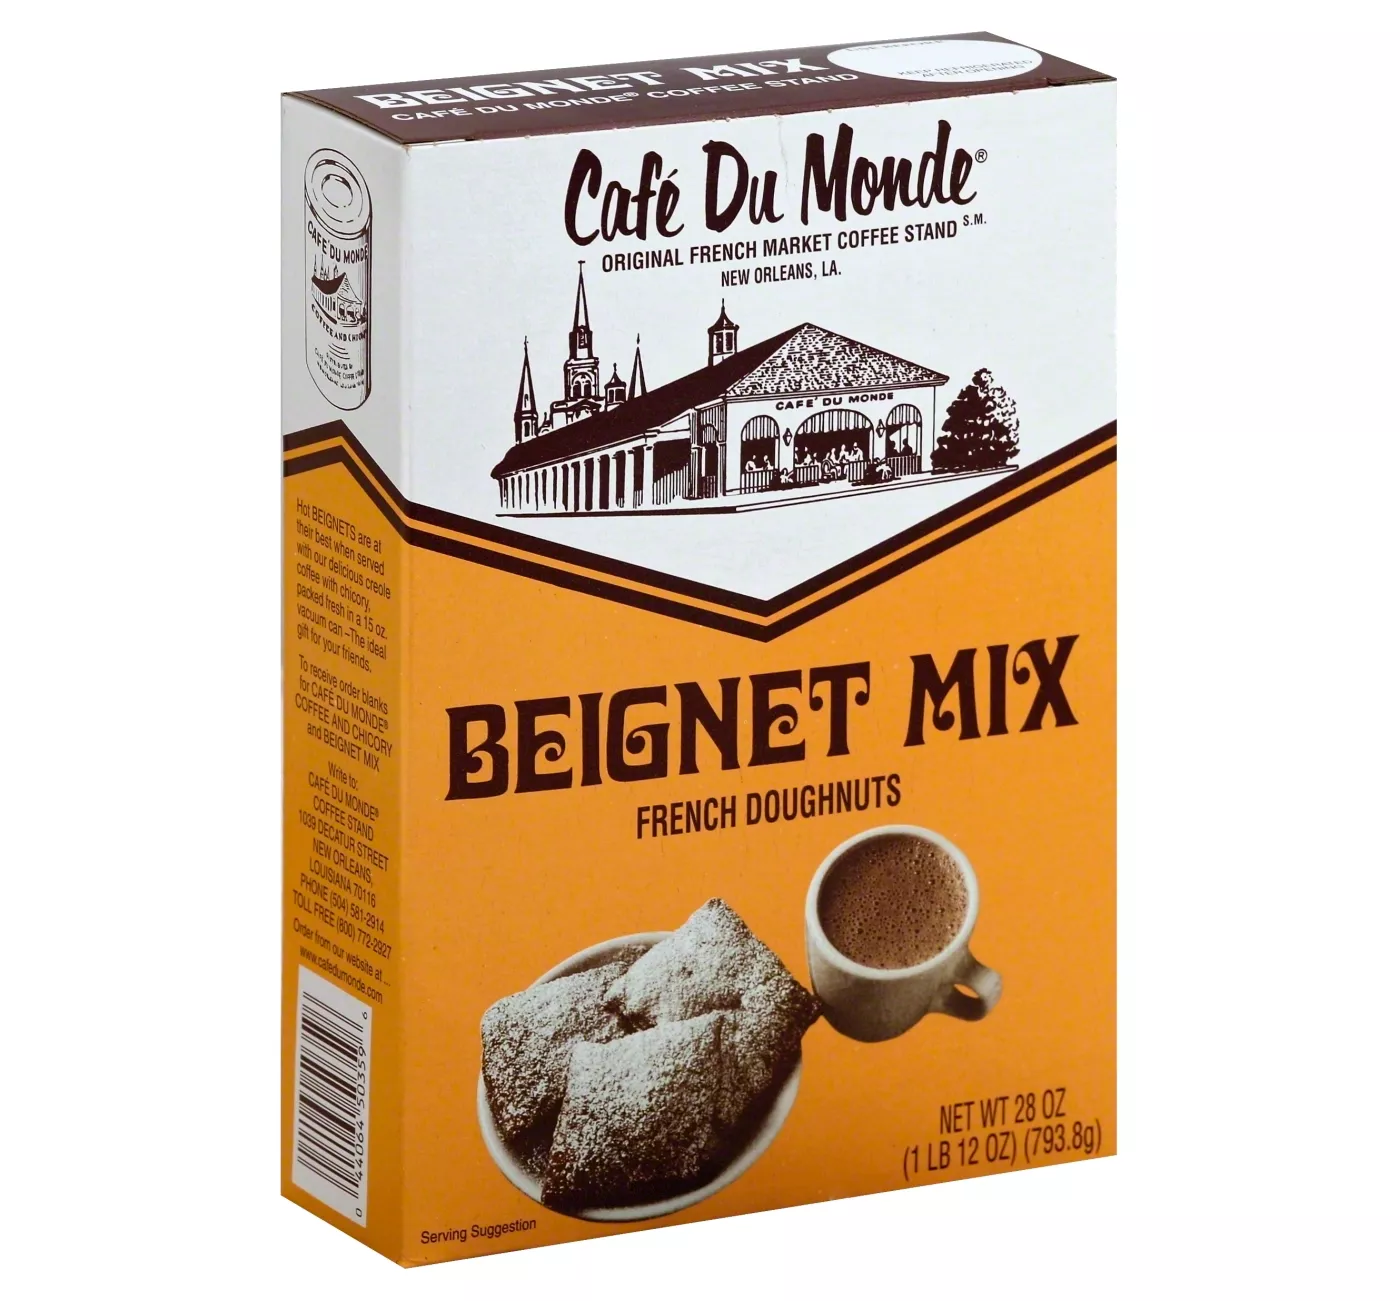 Caf Du Monde French Doughnut Beignet Mix - 28oz - image 1 of 1